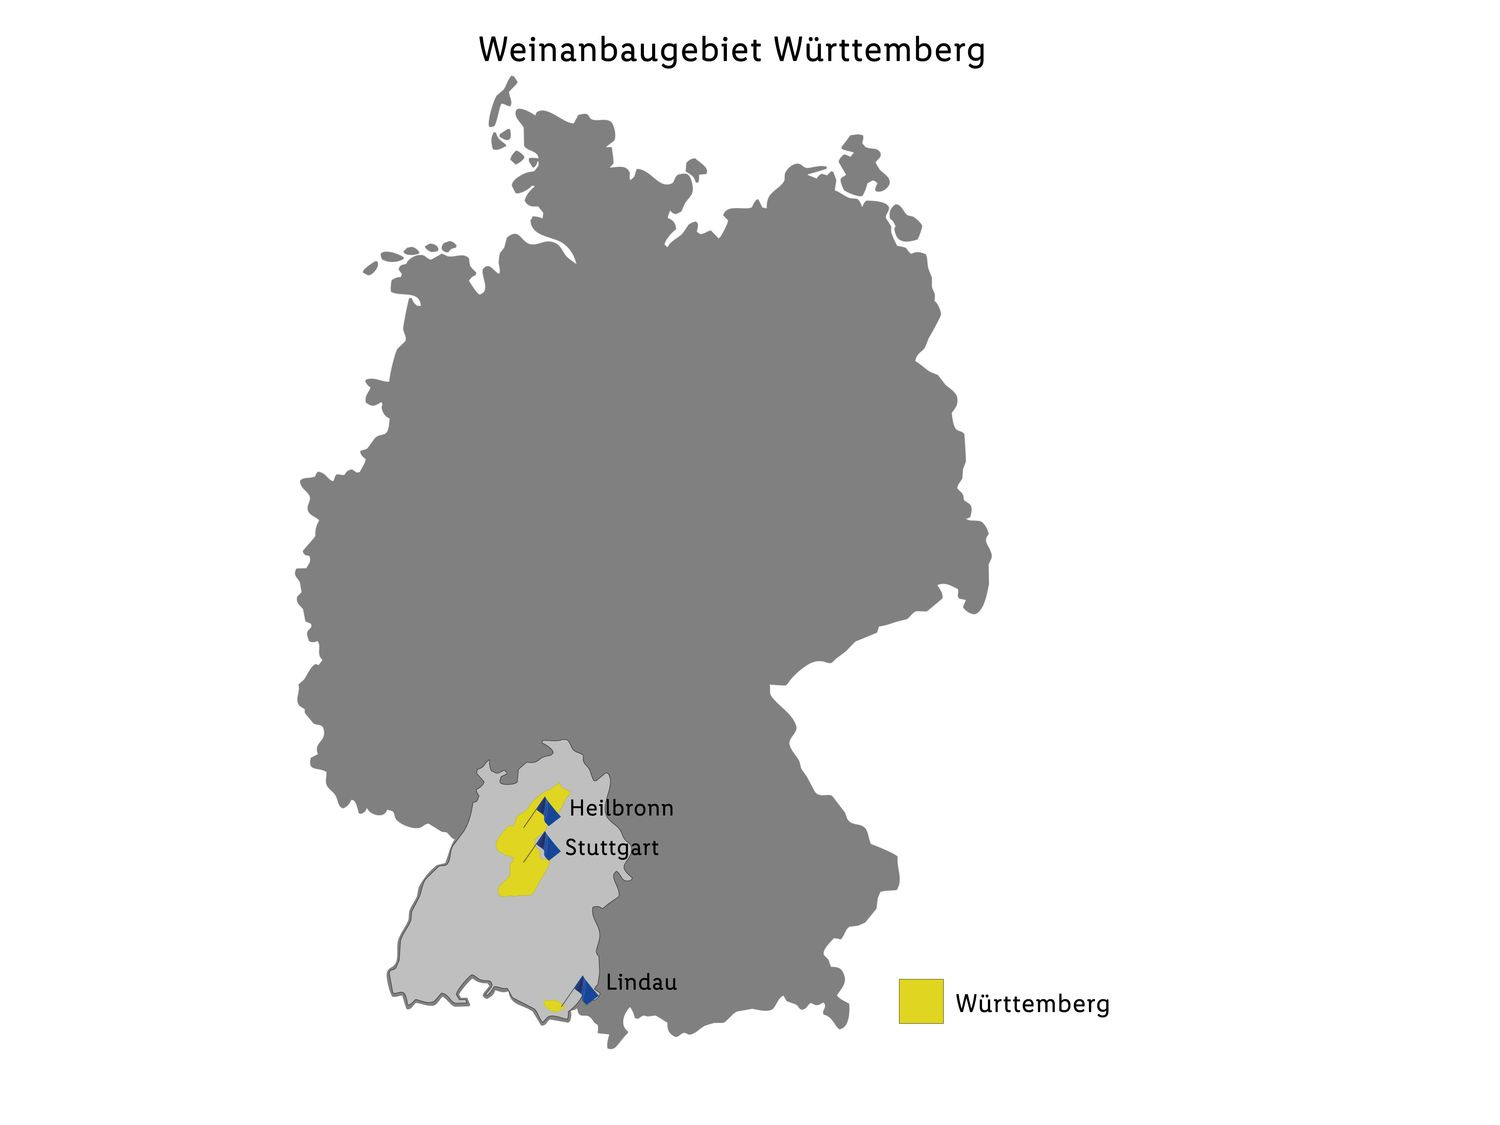 Württemberg Trollinger mit QbA halbtrocken, Lemberger …